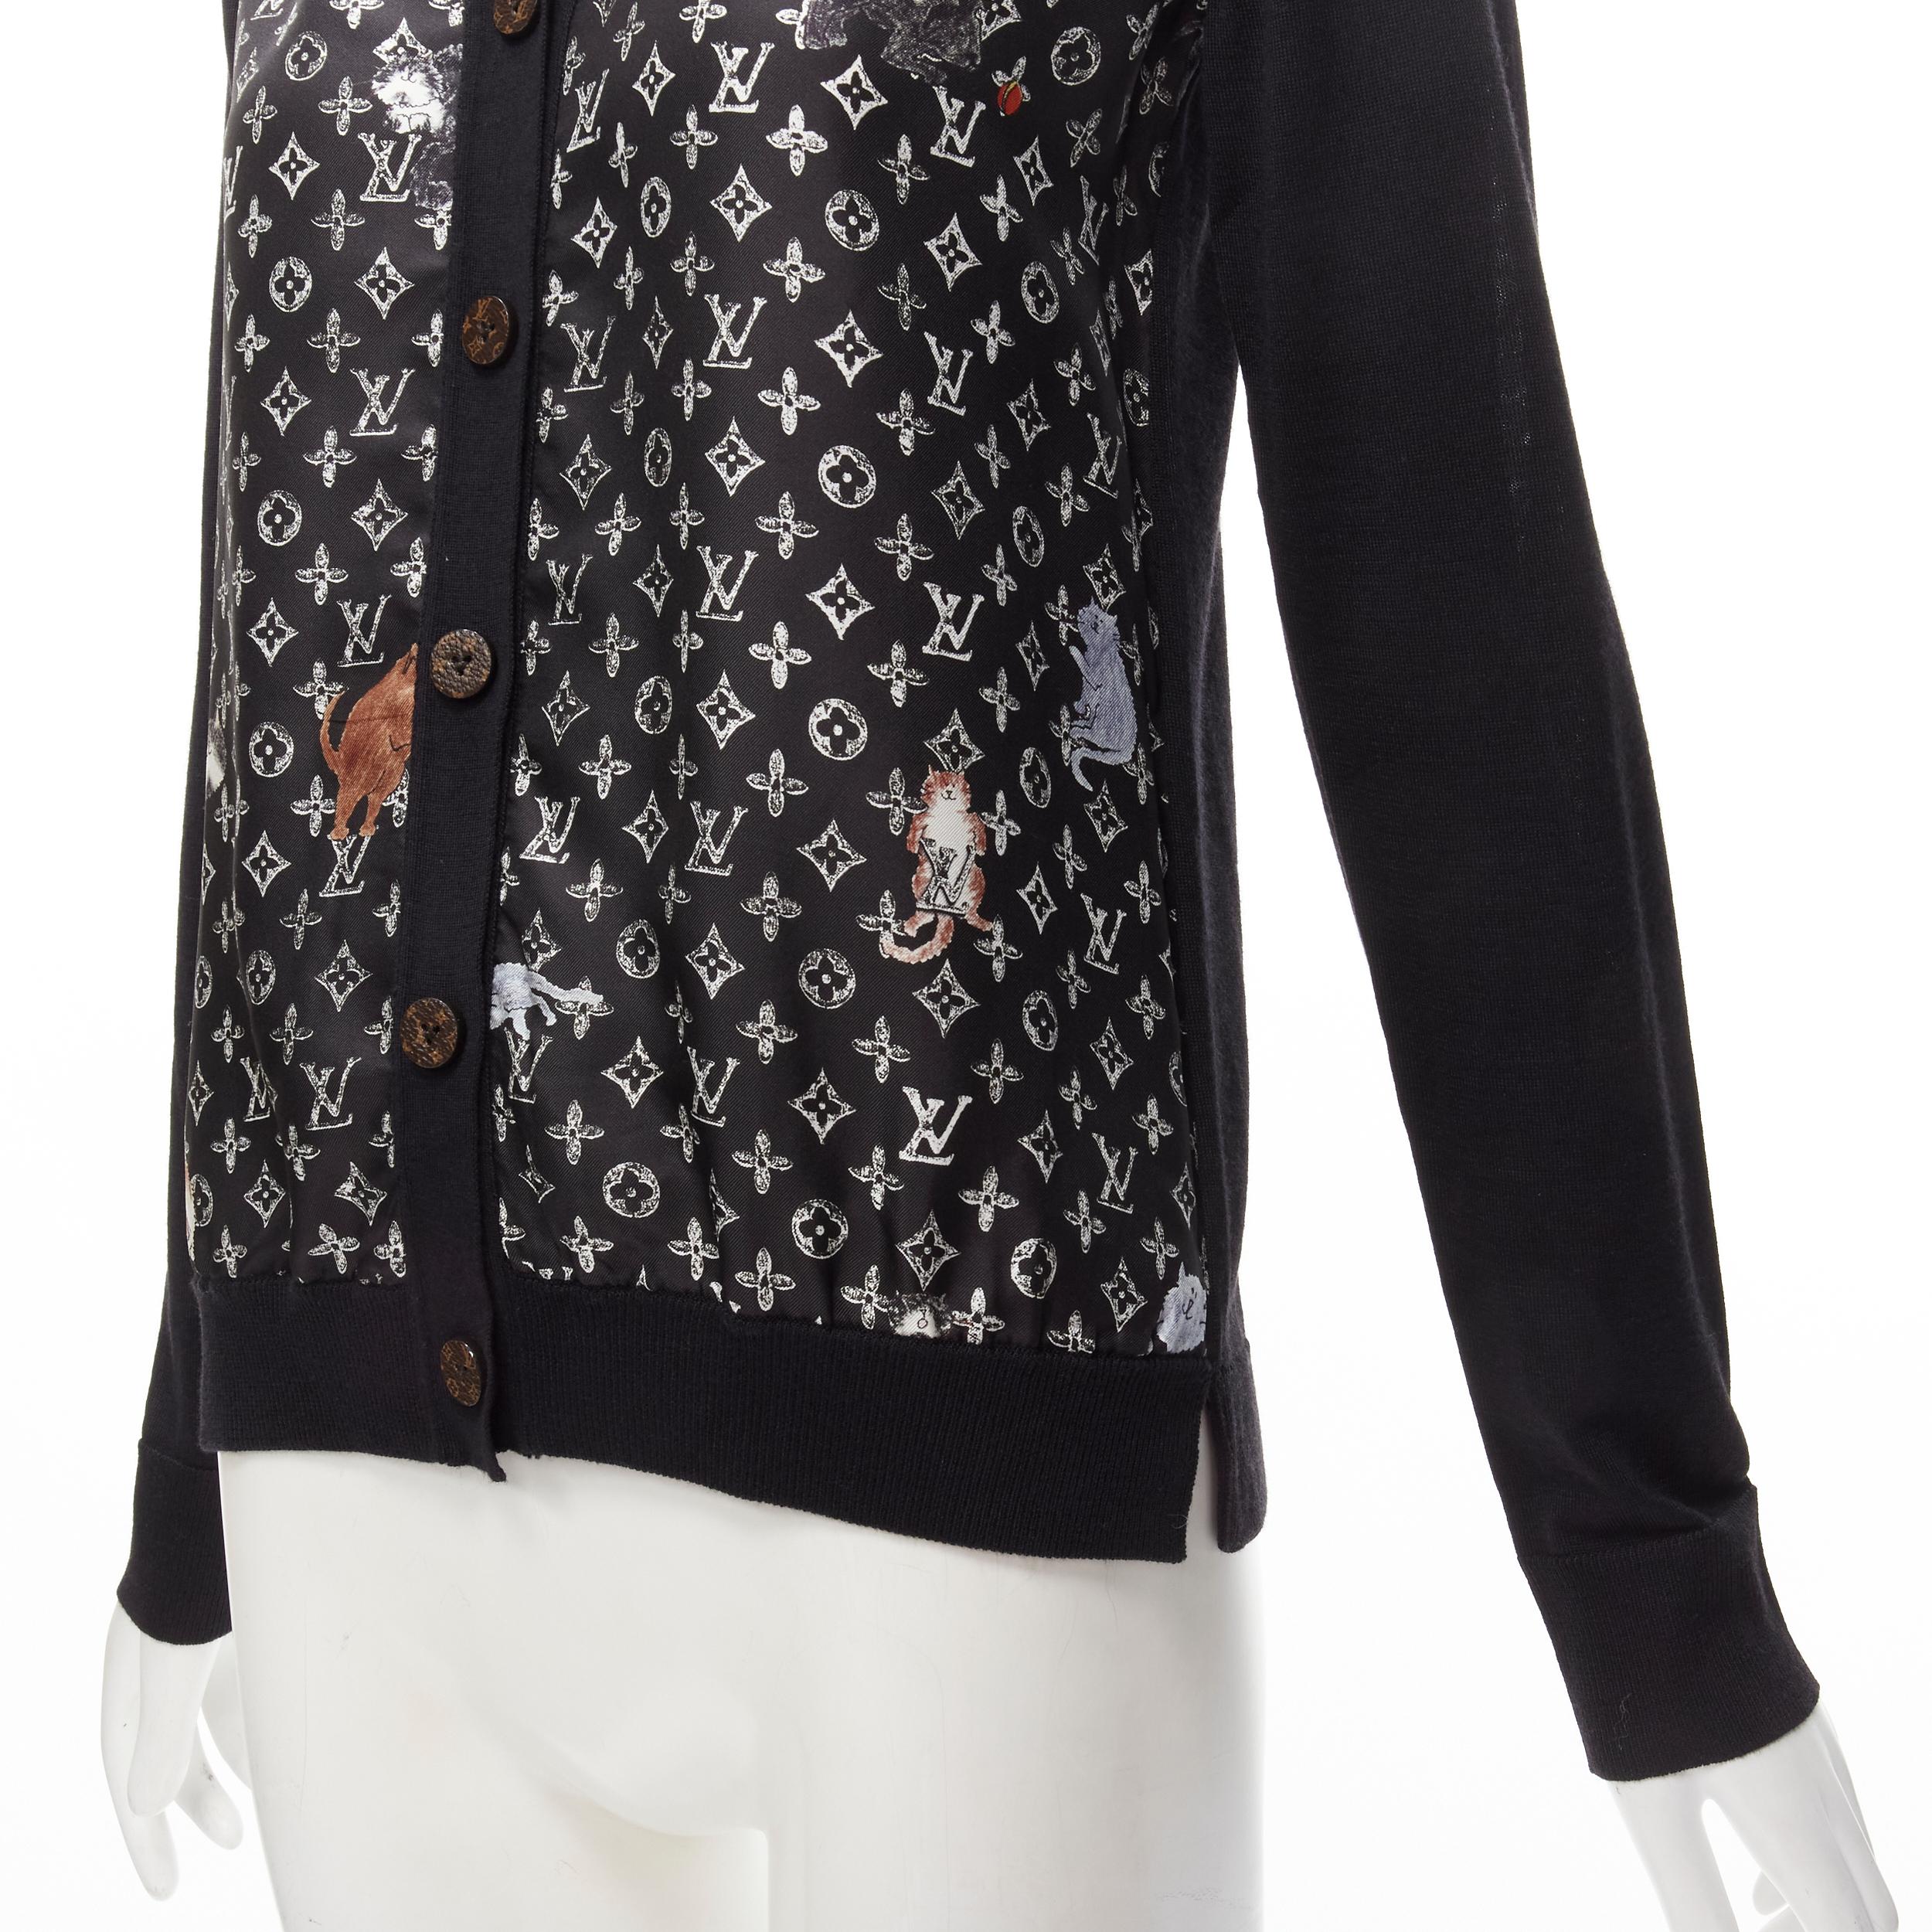 LOUIS VUITTON Catogram Grace Coddington black silk monogram cardigan sweater S 2